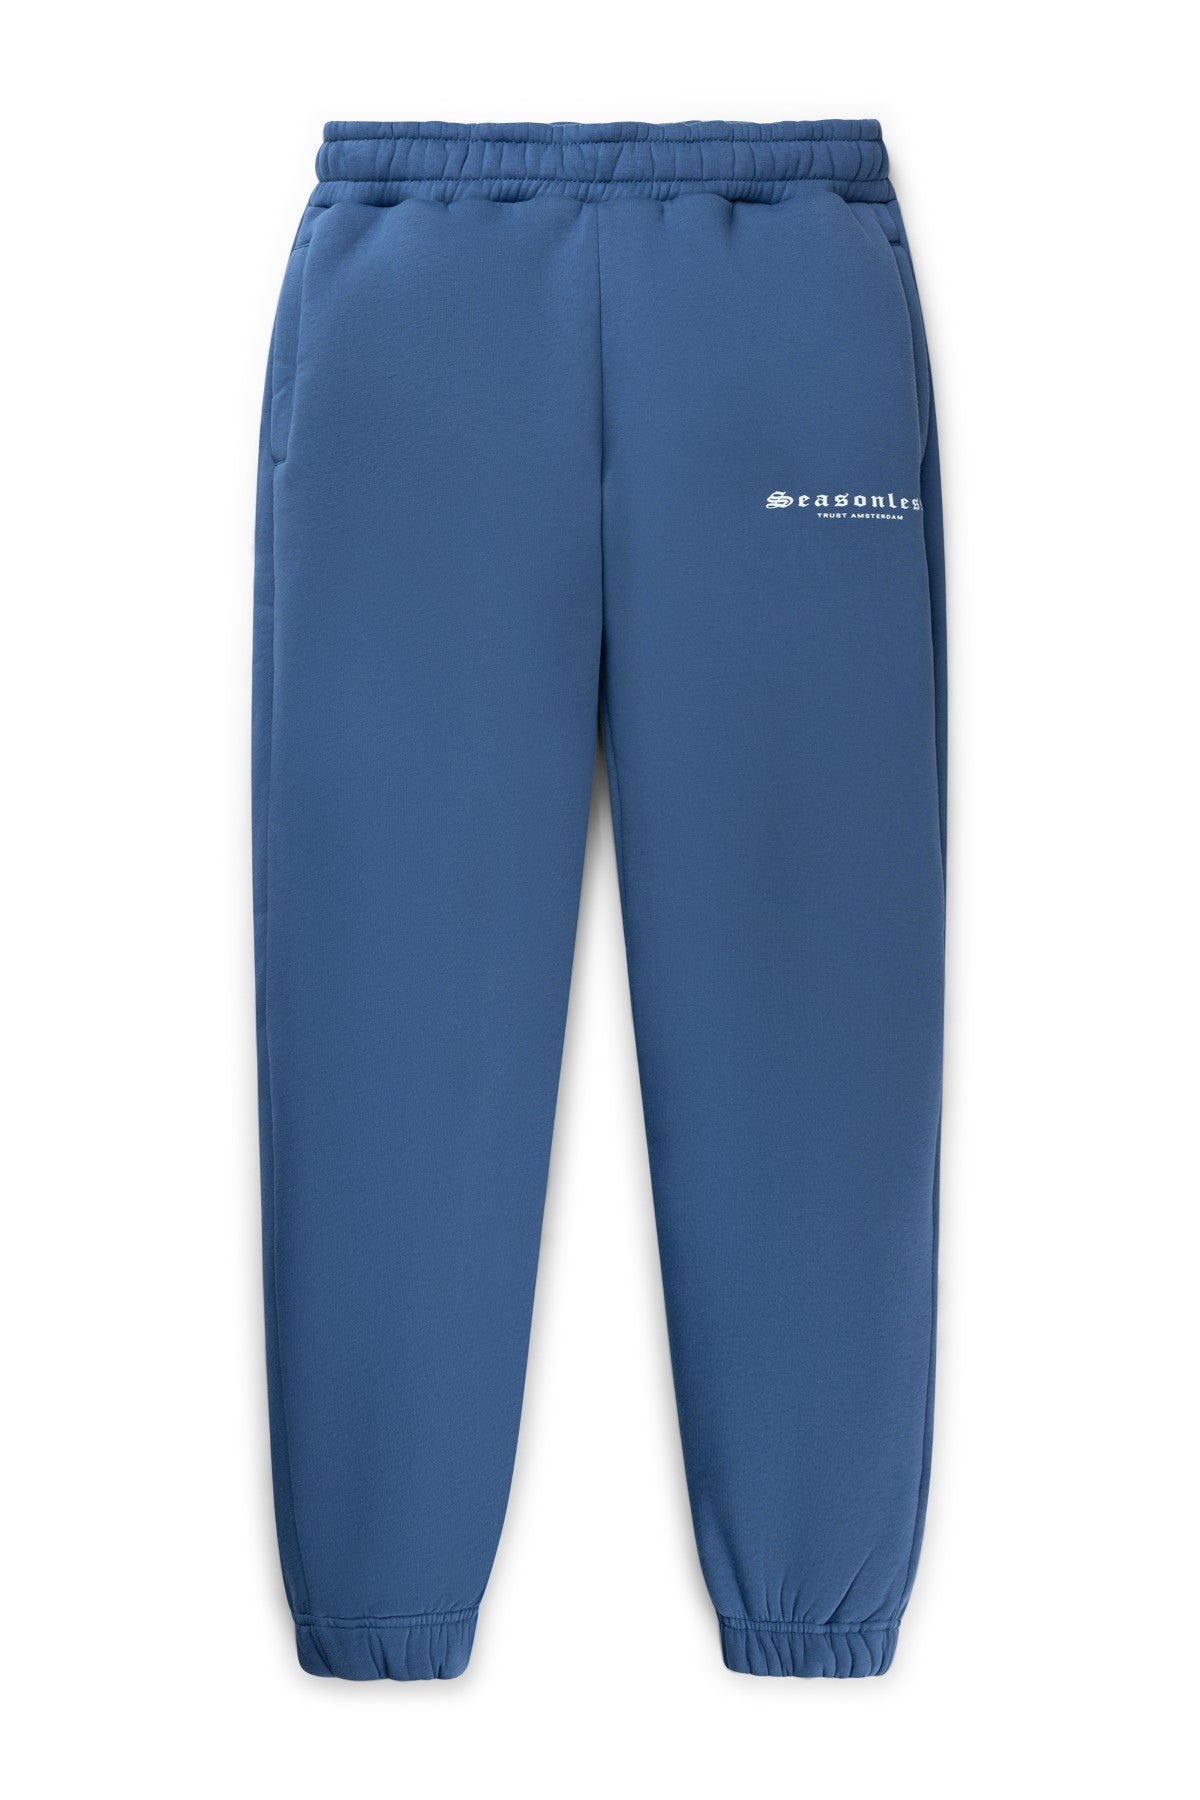 Seasonless Sweatpants - Navy Blue